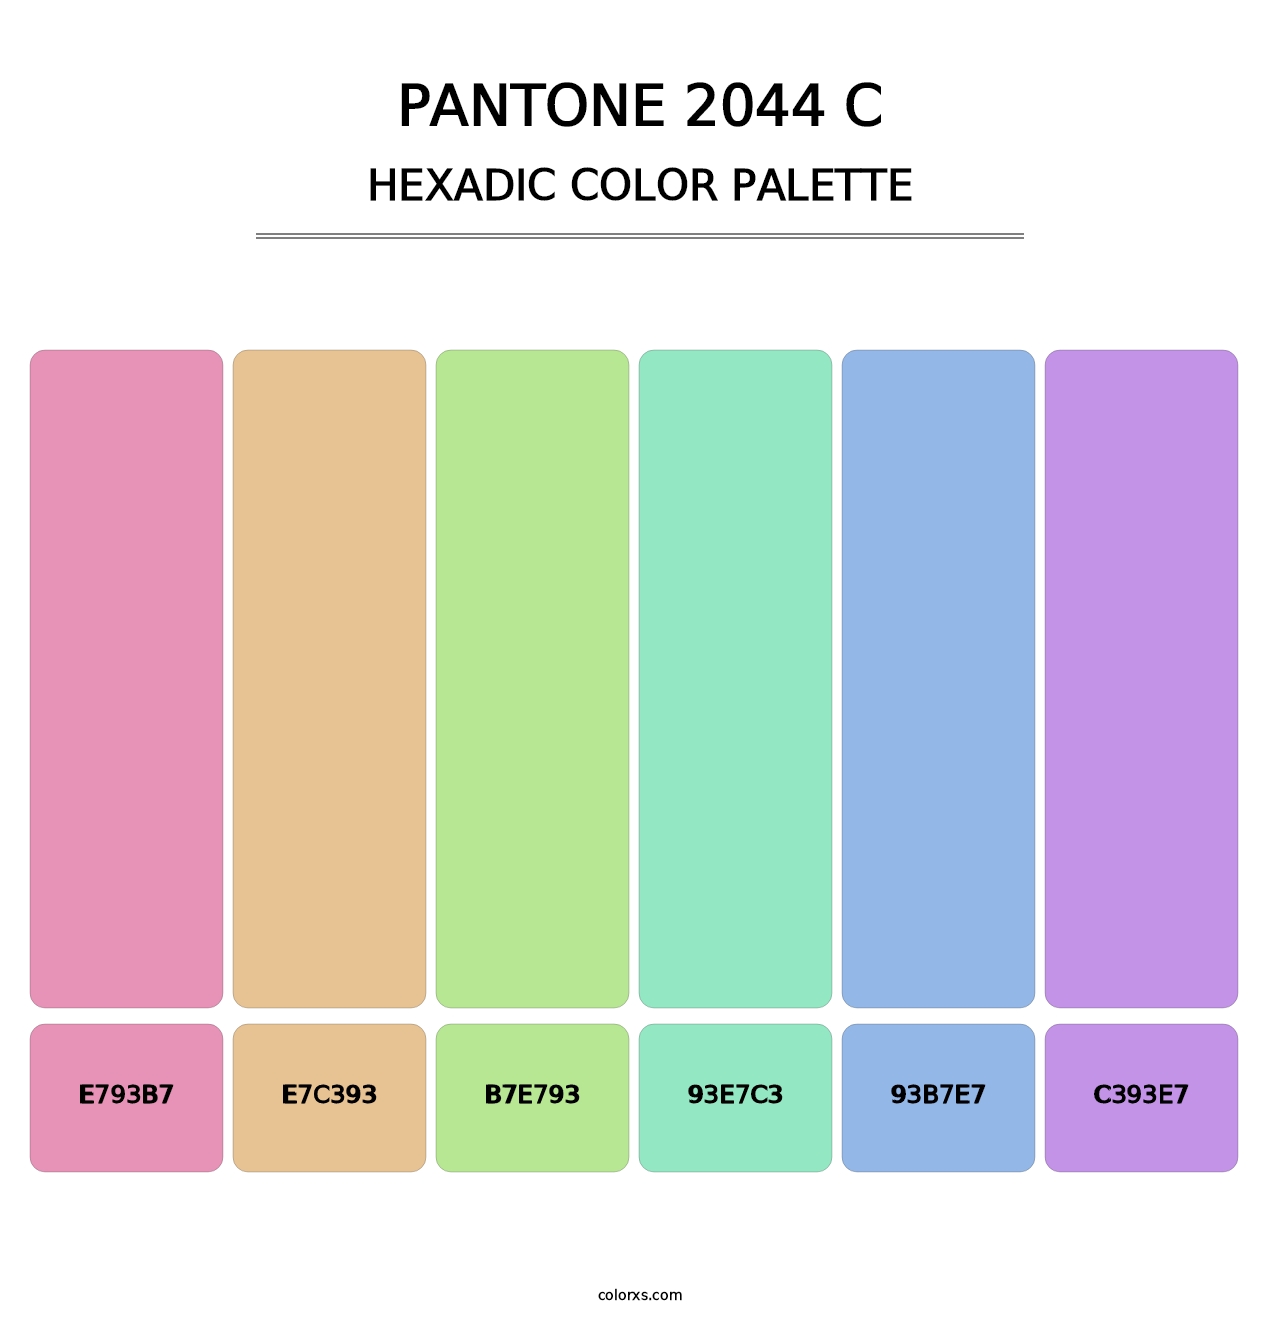 PANTONE 2044 C - Hexadic Color Palette